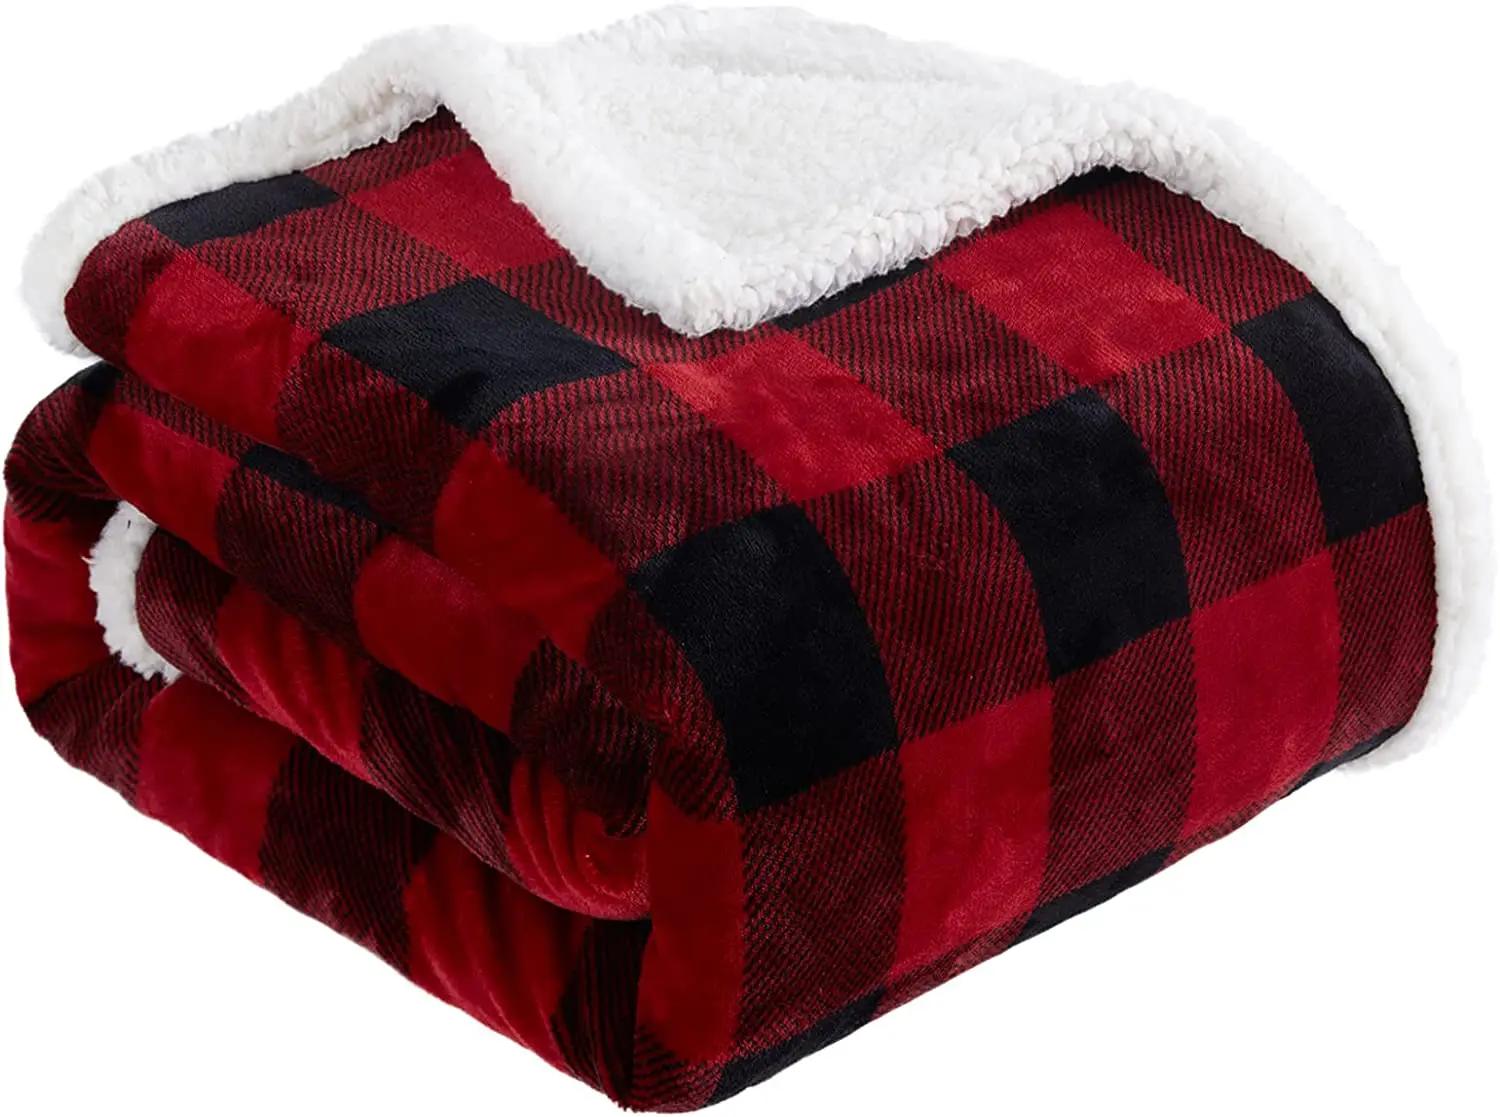 

Sherpa Buffalo Plaid Christmas Throw Blanket Fuzzy Soft Cozy Blanket Fleece Flannel Plush Microfiber Blanket for Couch Bed Sofa